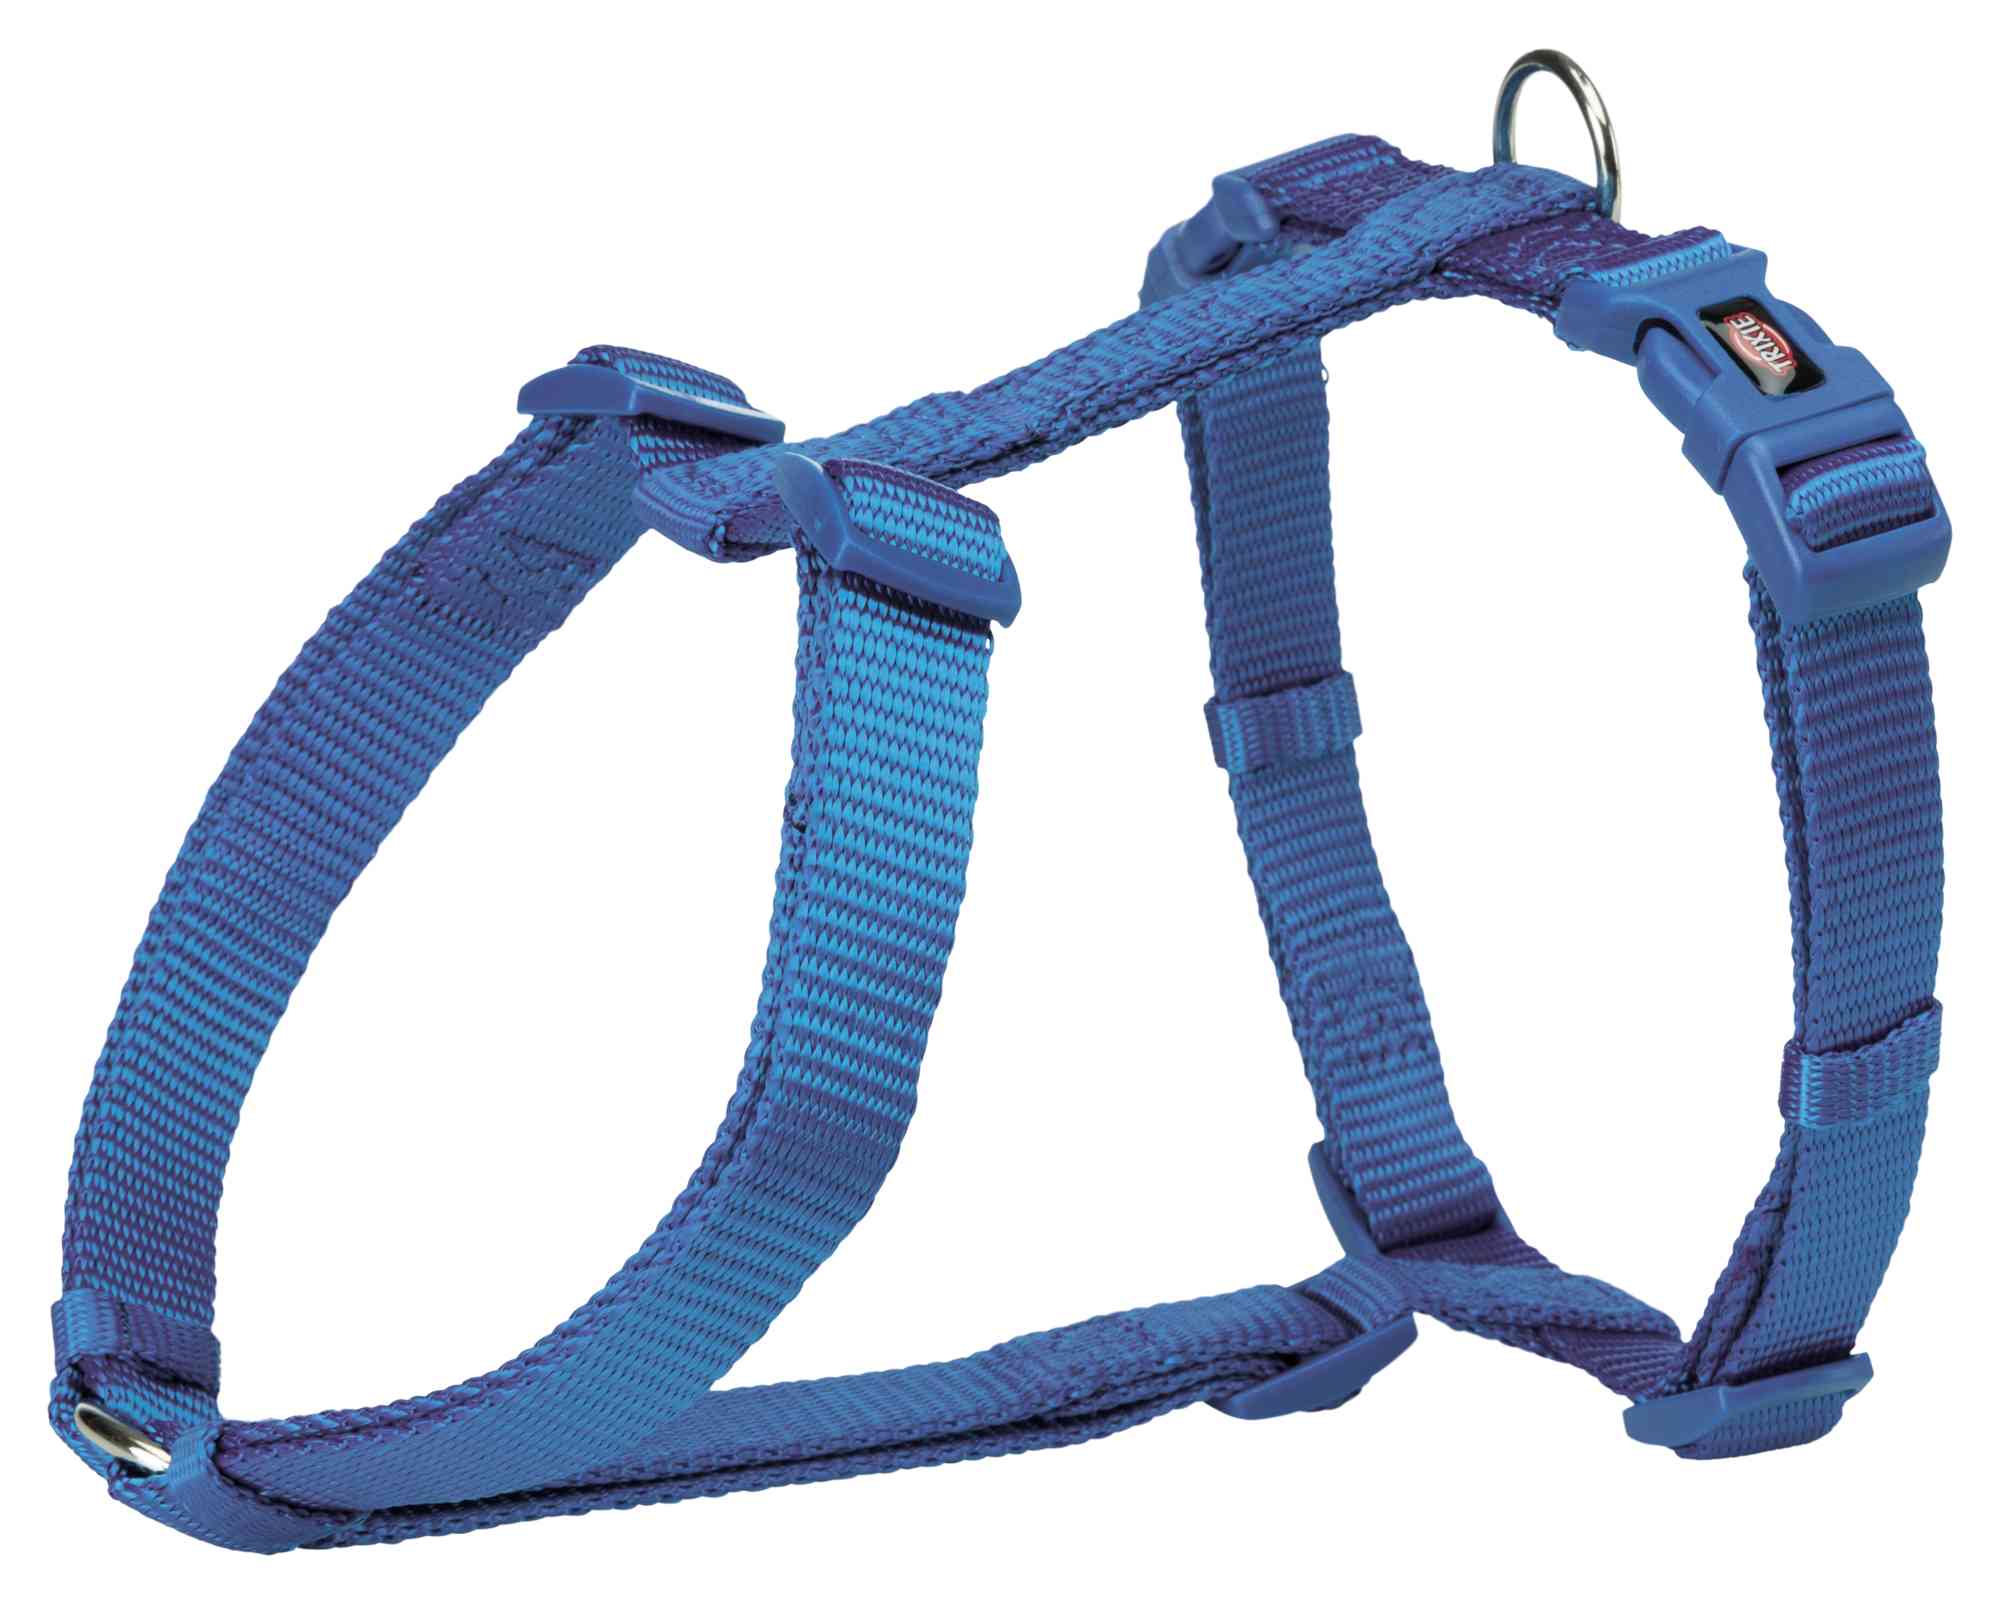 Правильная шлейка для собаки. Шлейка Trixie Premium XXS-XS. Шлейка Trixie Premium h-harness. (Трикси) шлейка трикси Premium h-harness l-XL 75-120см/25мм 203524 мятный. Шлейка для собак JOYSER walk Base Step-in harness s голубая.